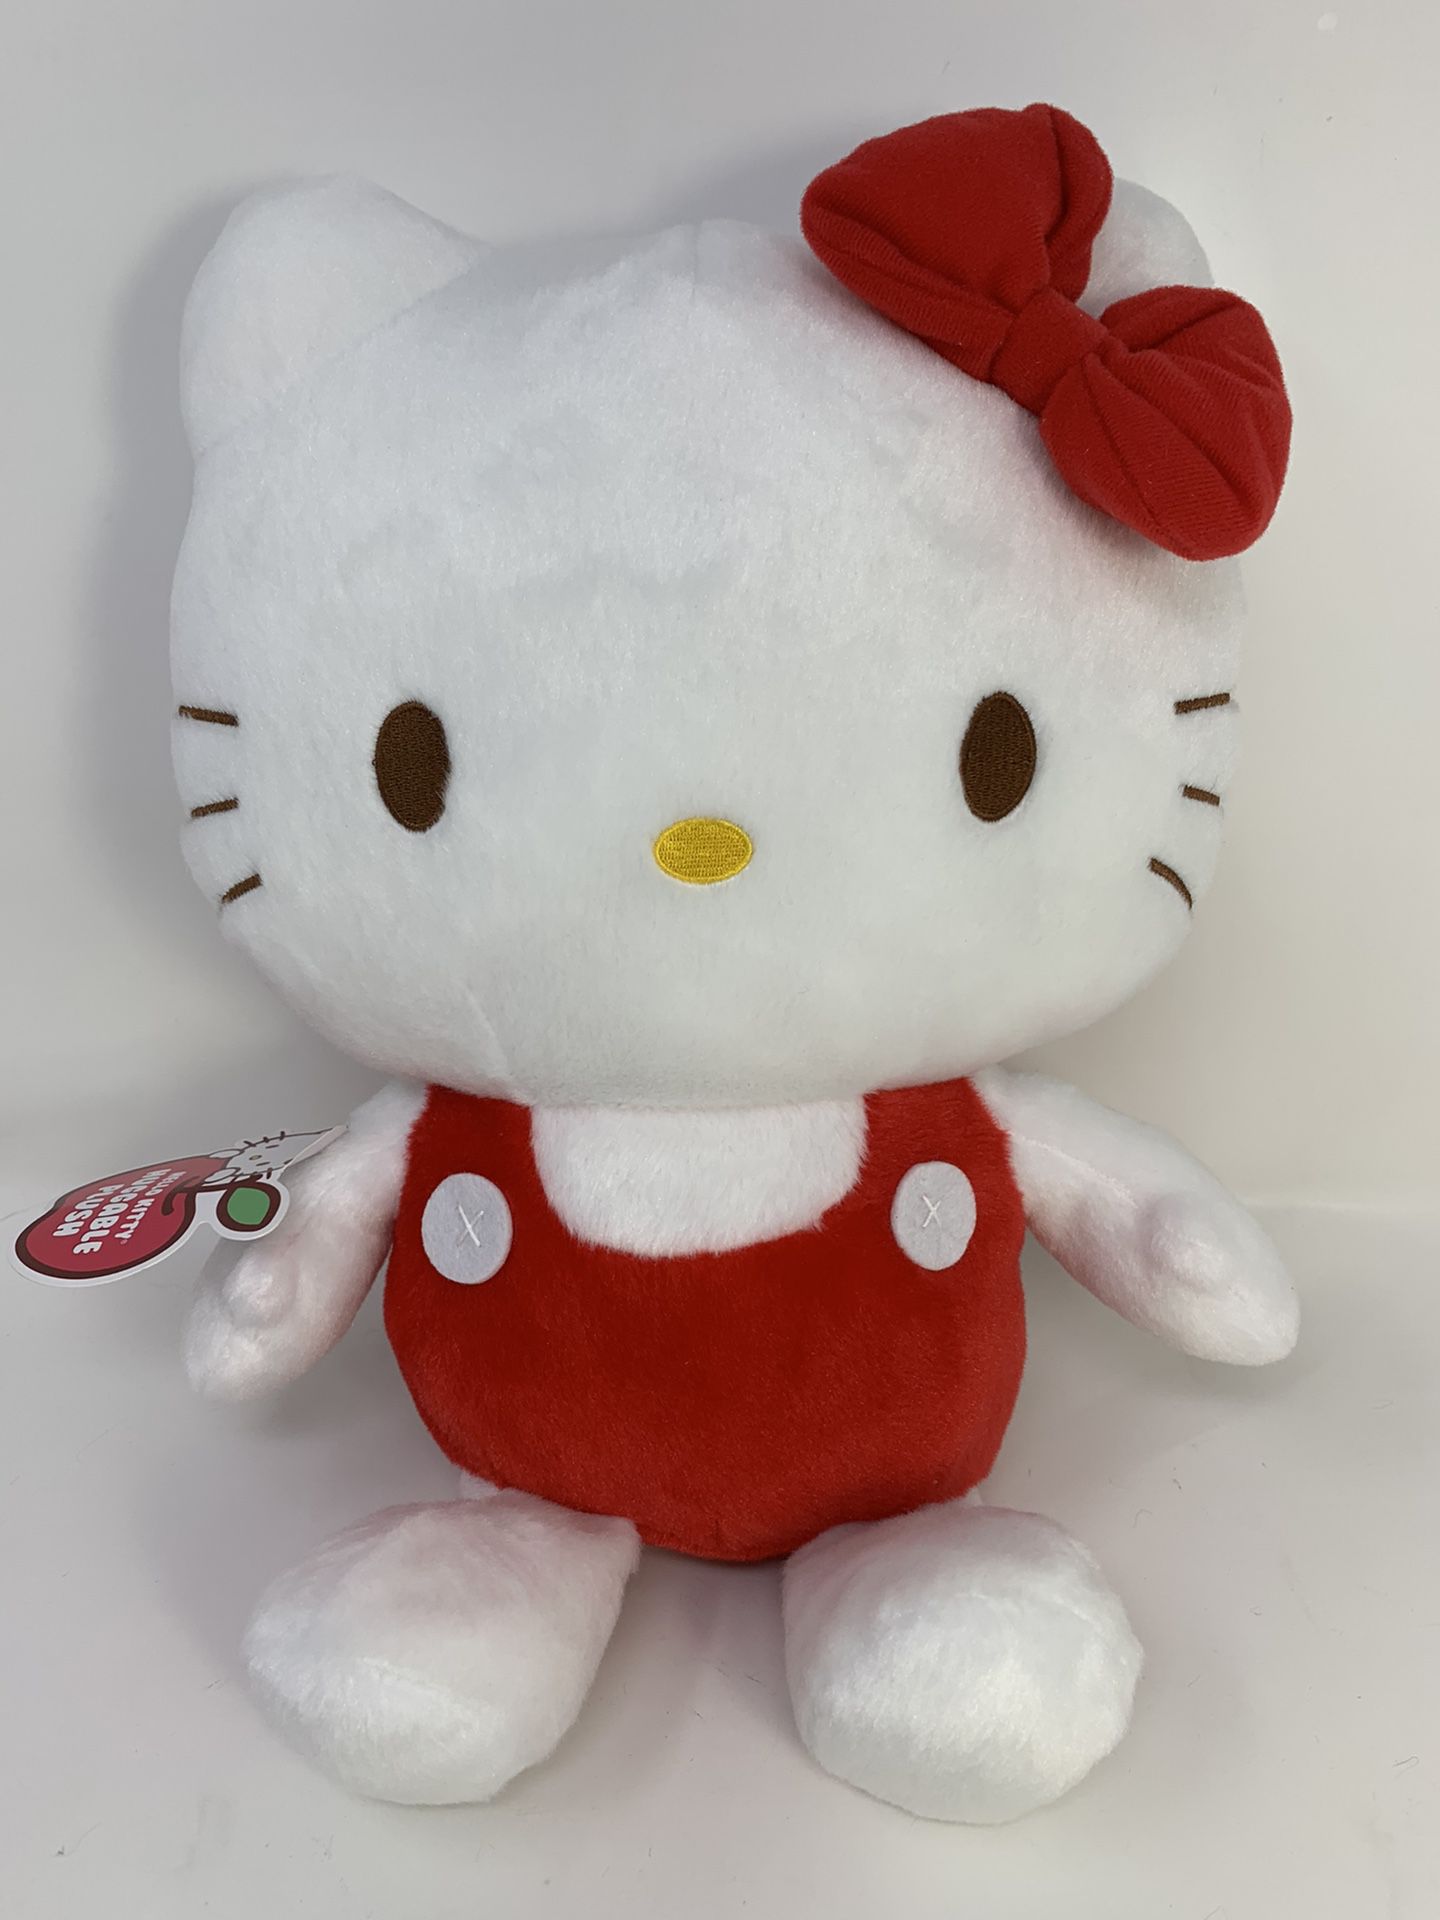 Sanrio Hello Kitty Stuffed Plush Doll Toy : 15" Kitty in Red 2014